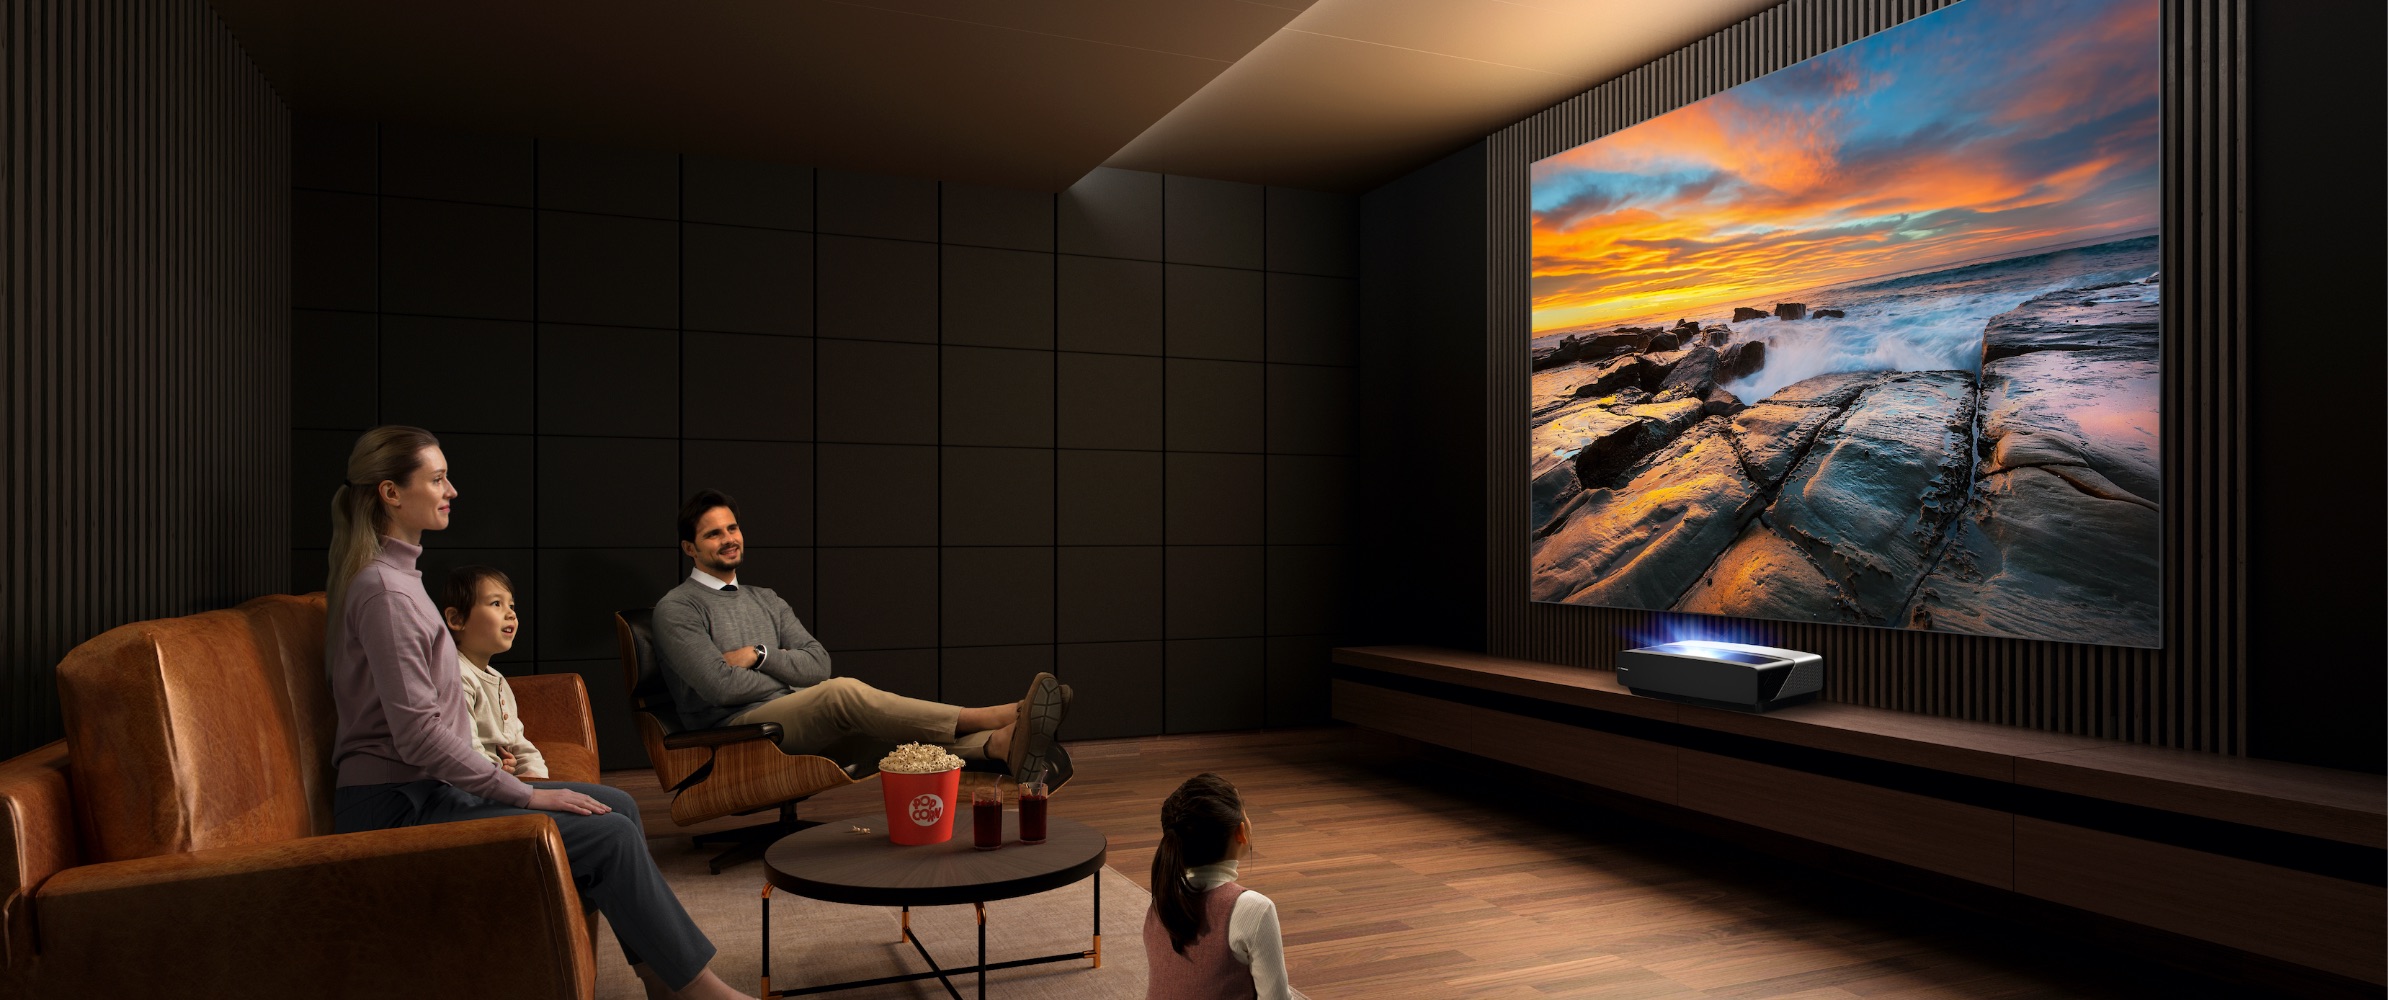 Hisense 120L5 - Home Cinema Experience